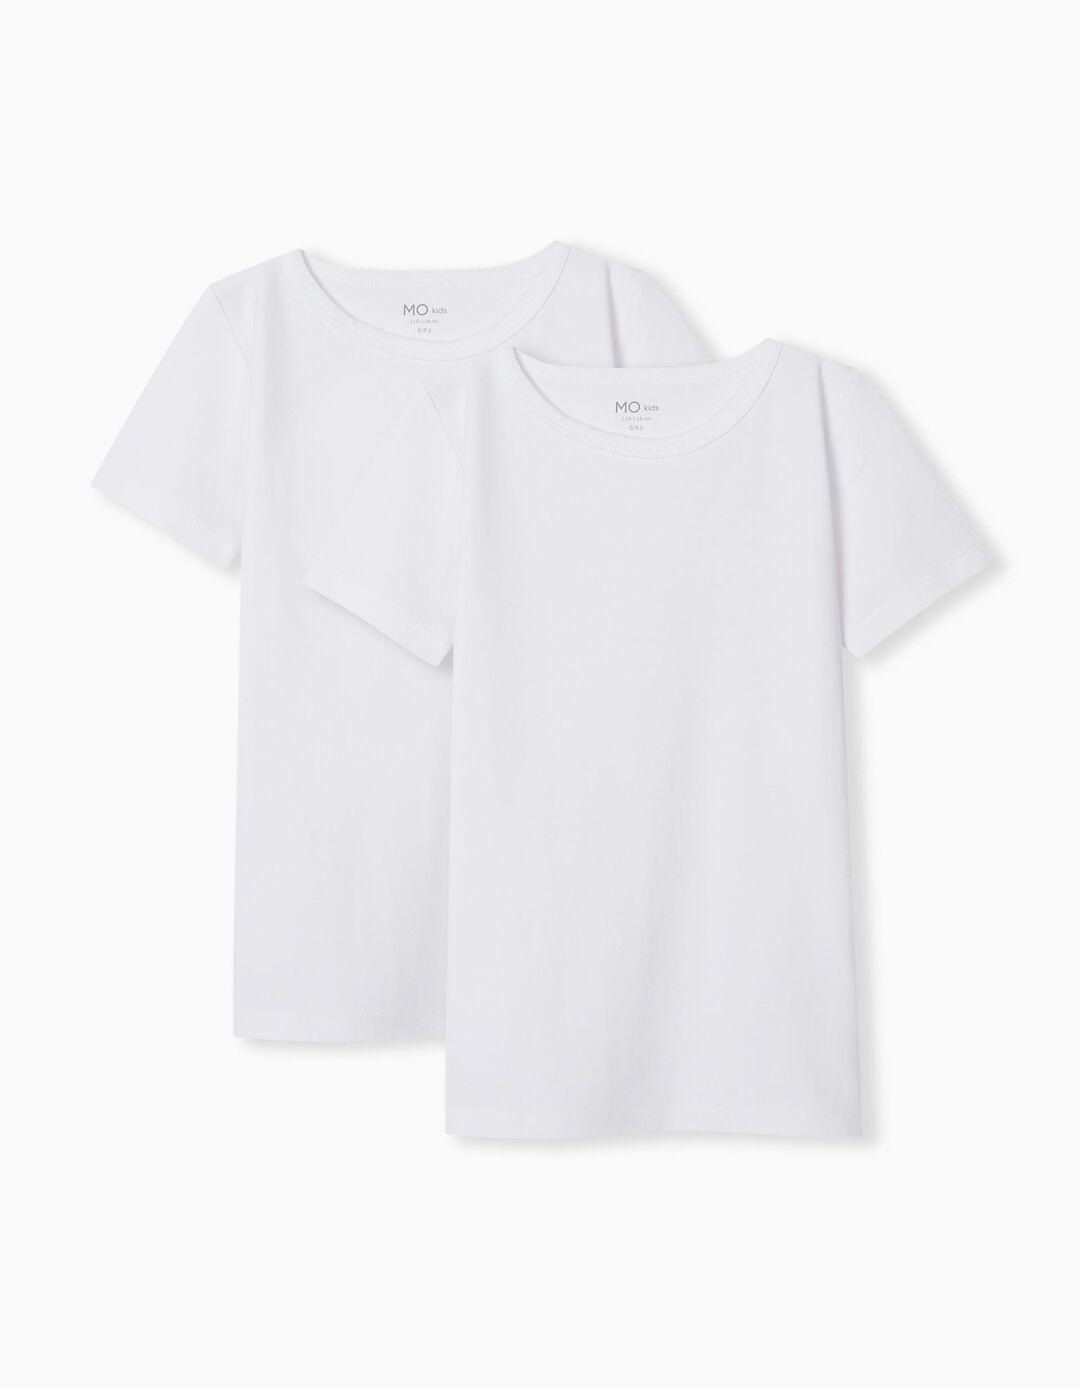 2 Underwear Short Sleeve T-shirts, Boys, White